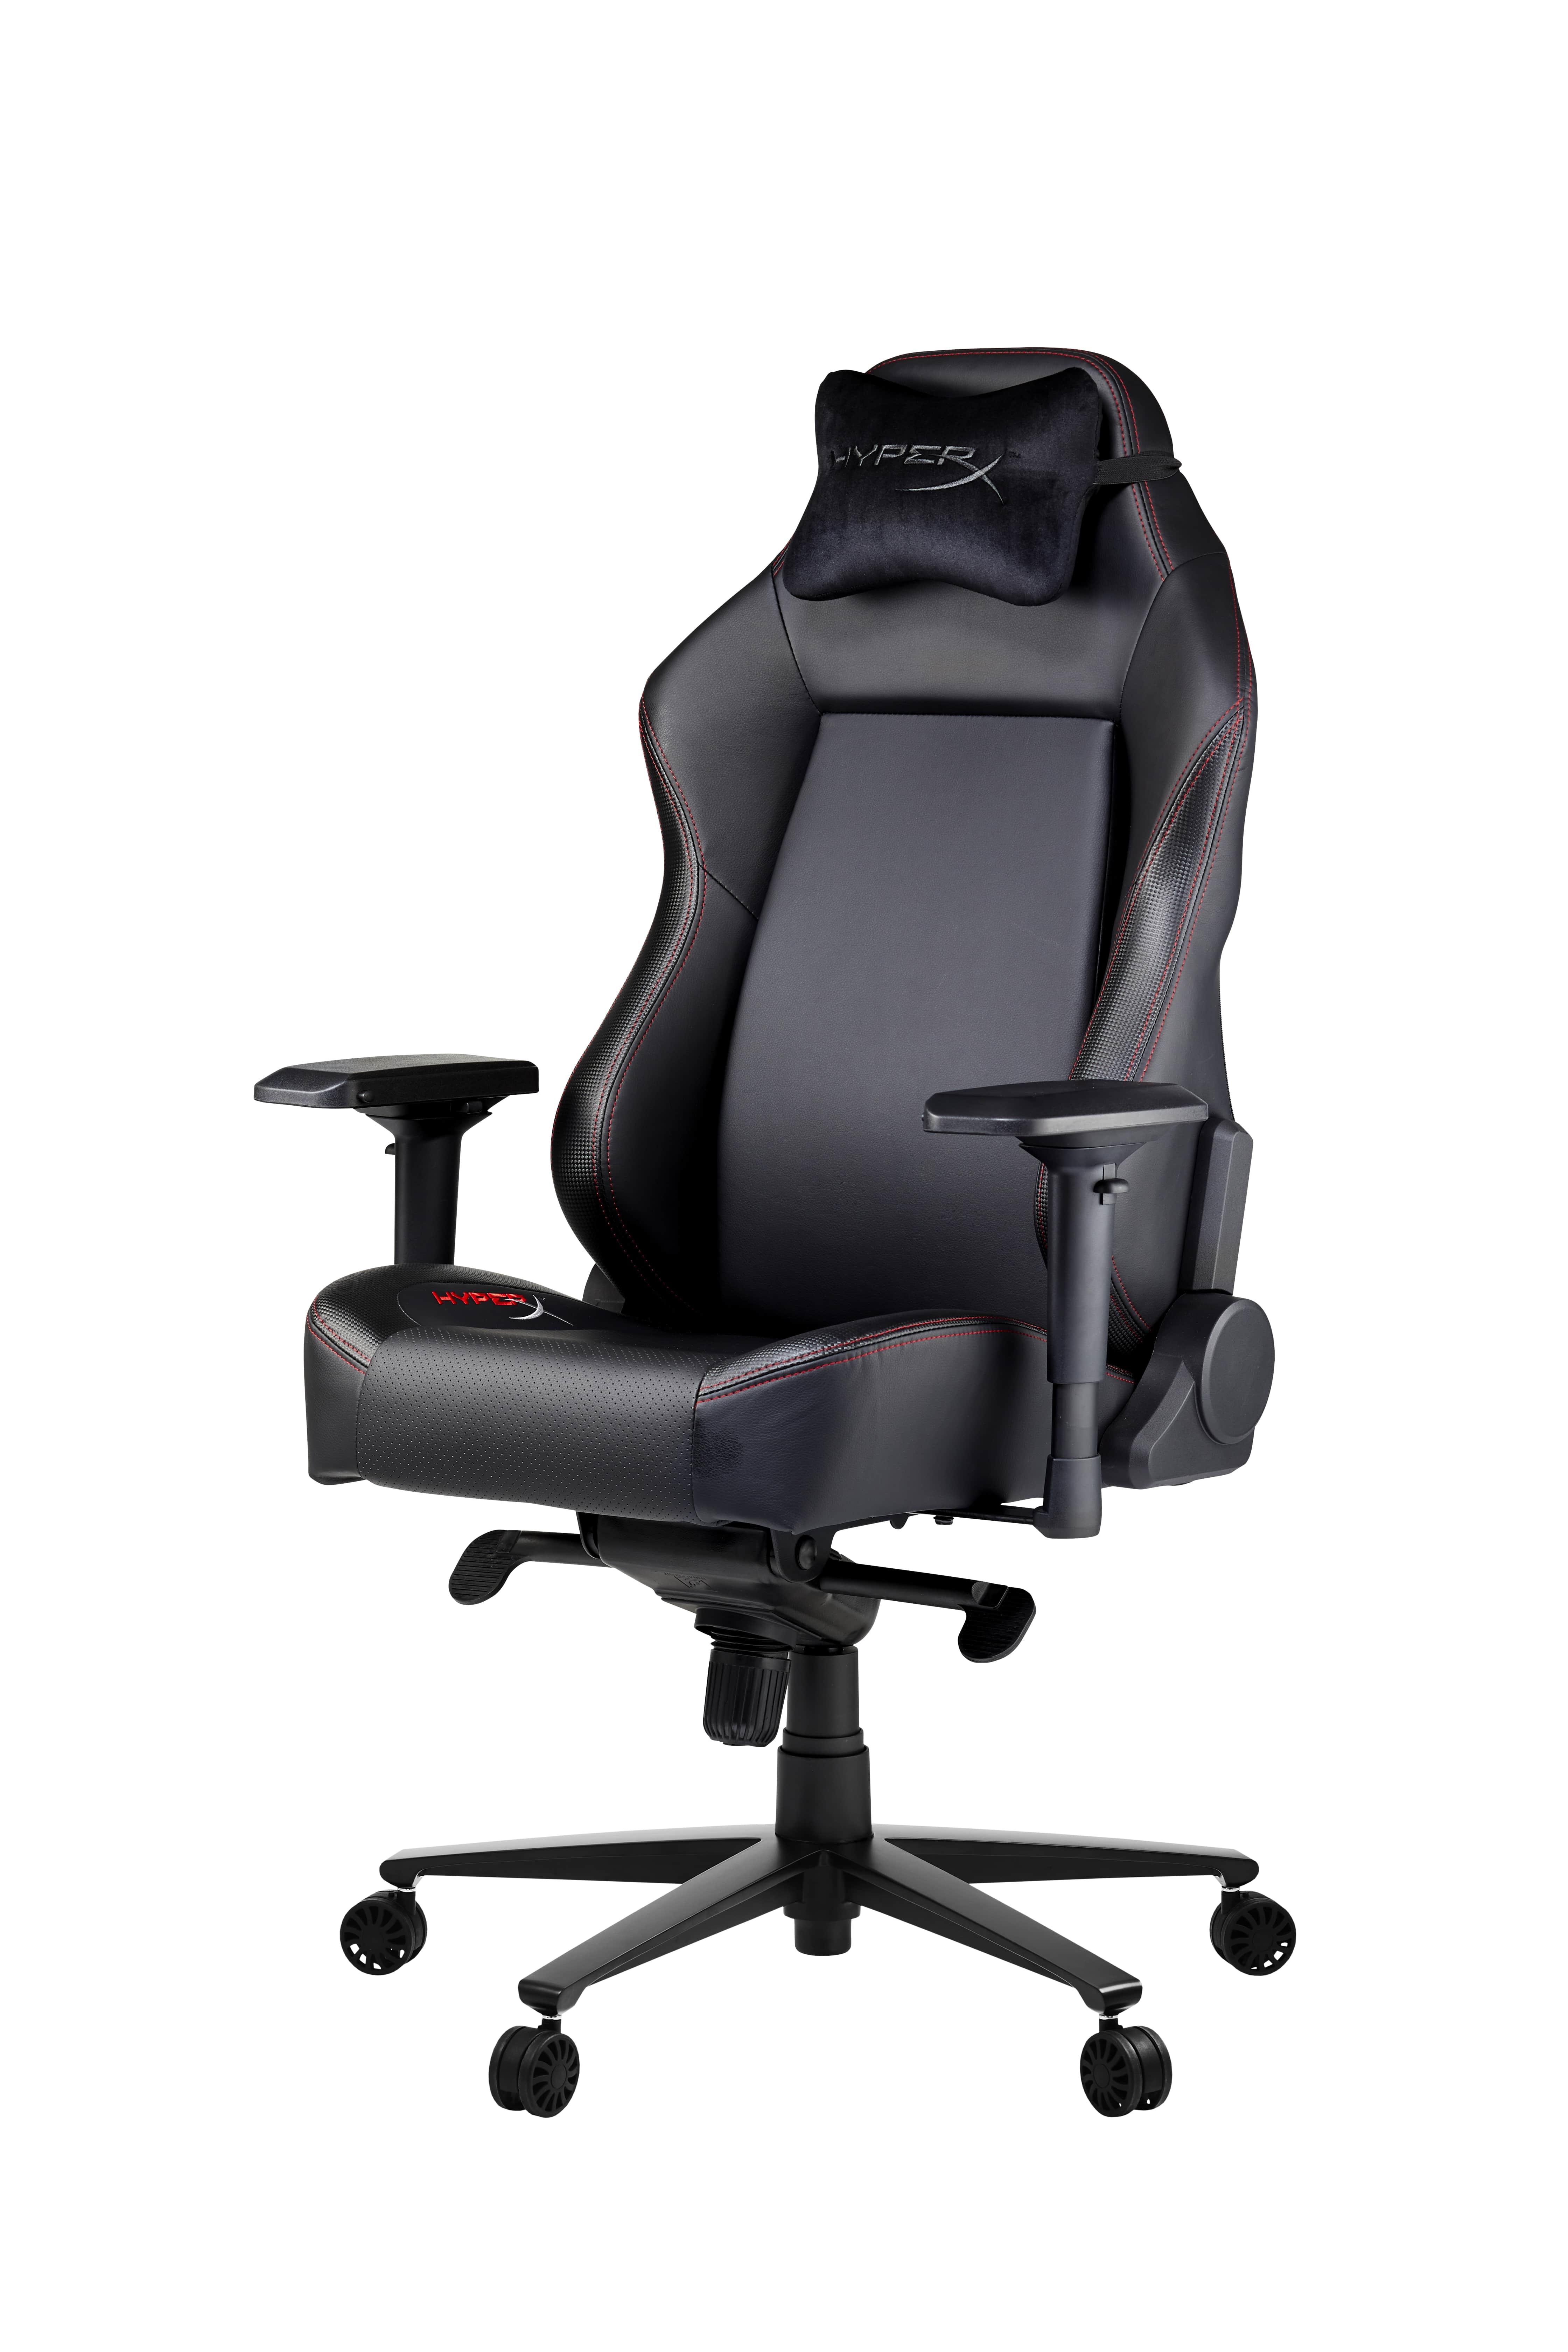 HyperX STEALTH gaming chair